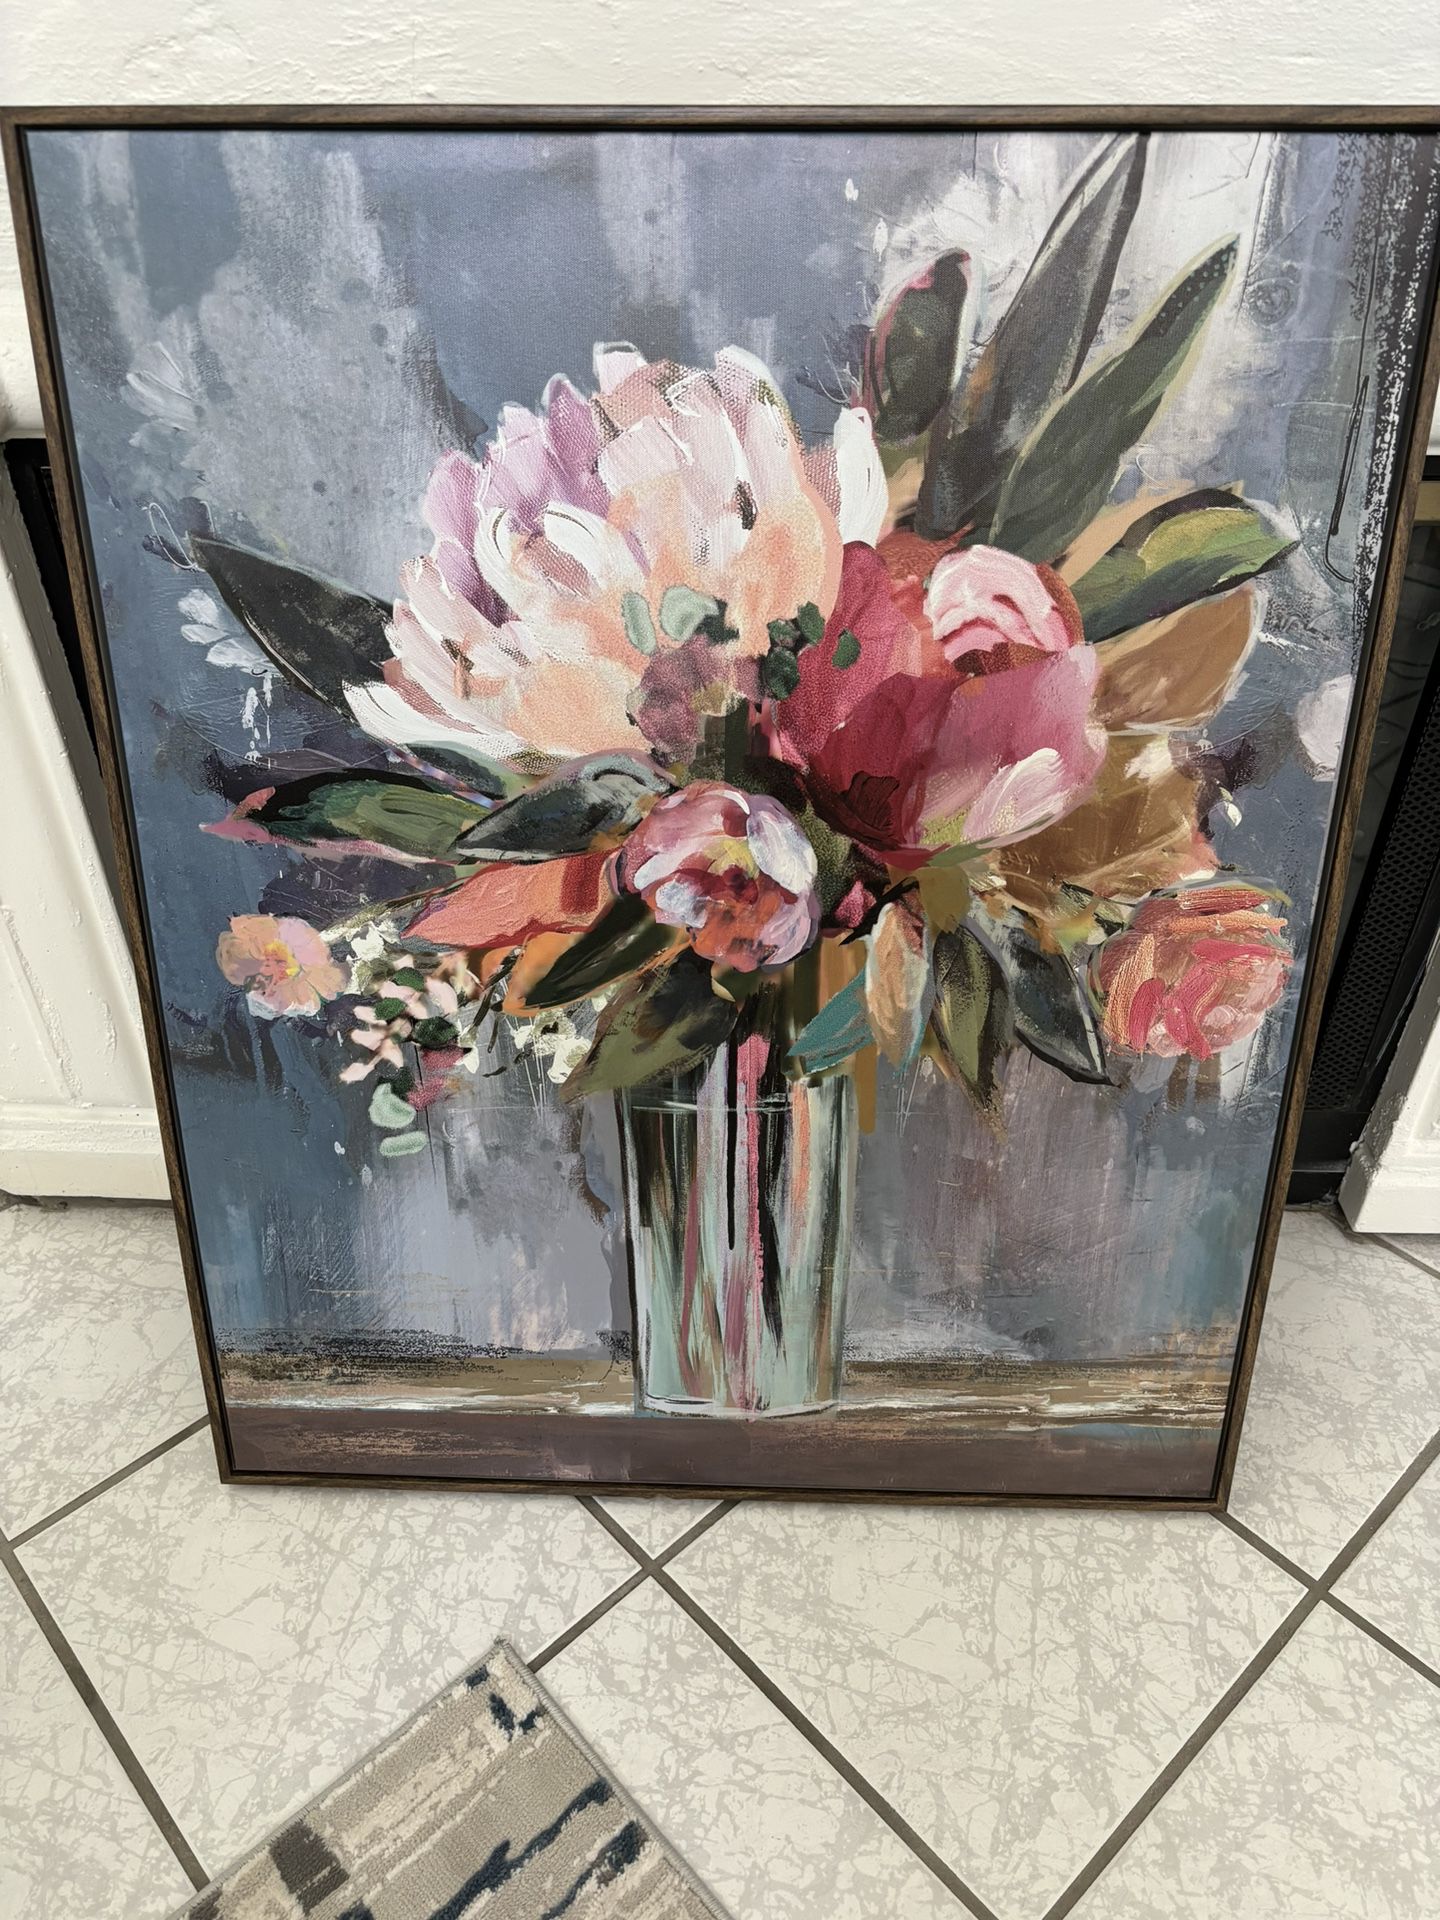 Frames Painting Of Floral Arrangement 